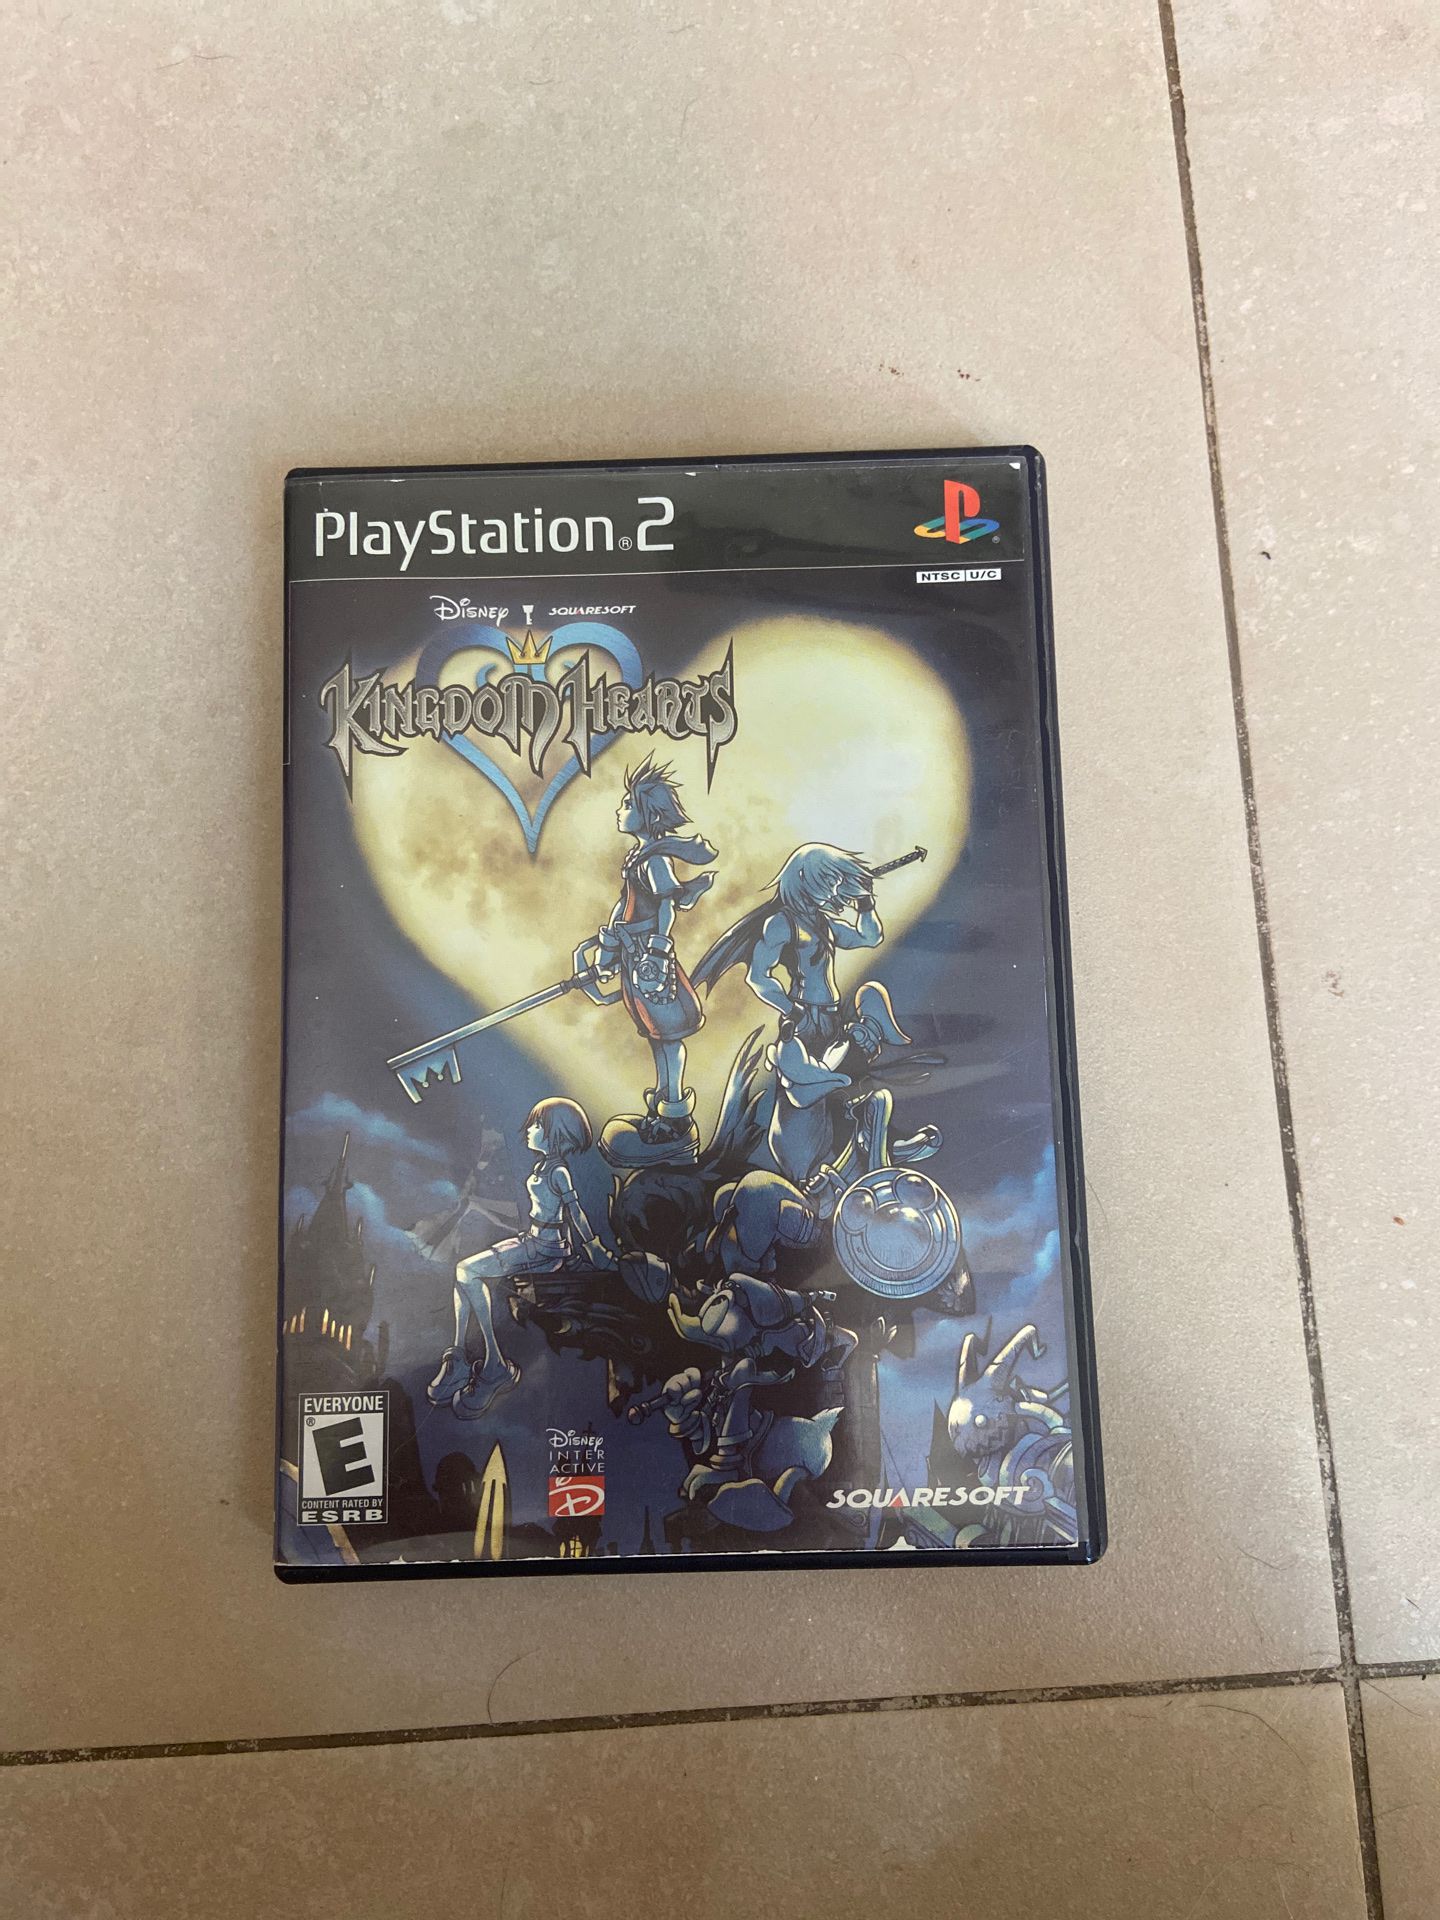 Kingdom Hearts 1 for PS2